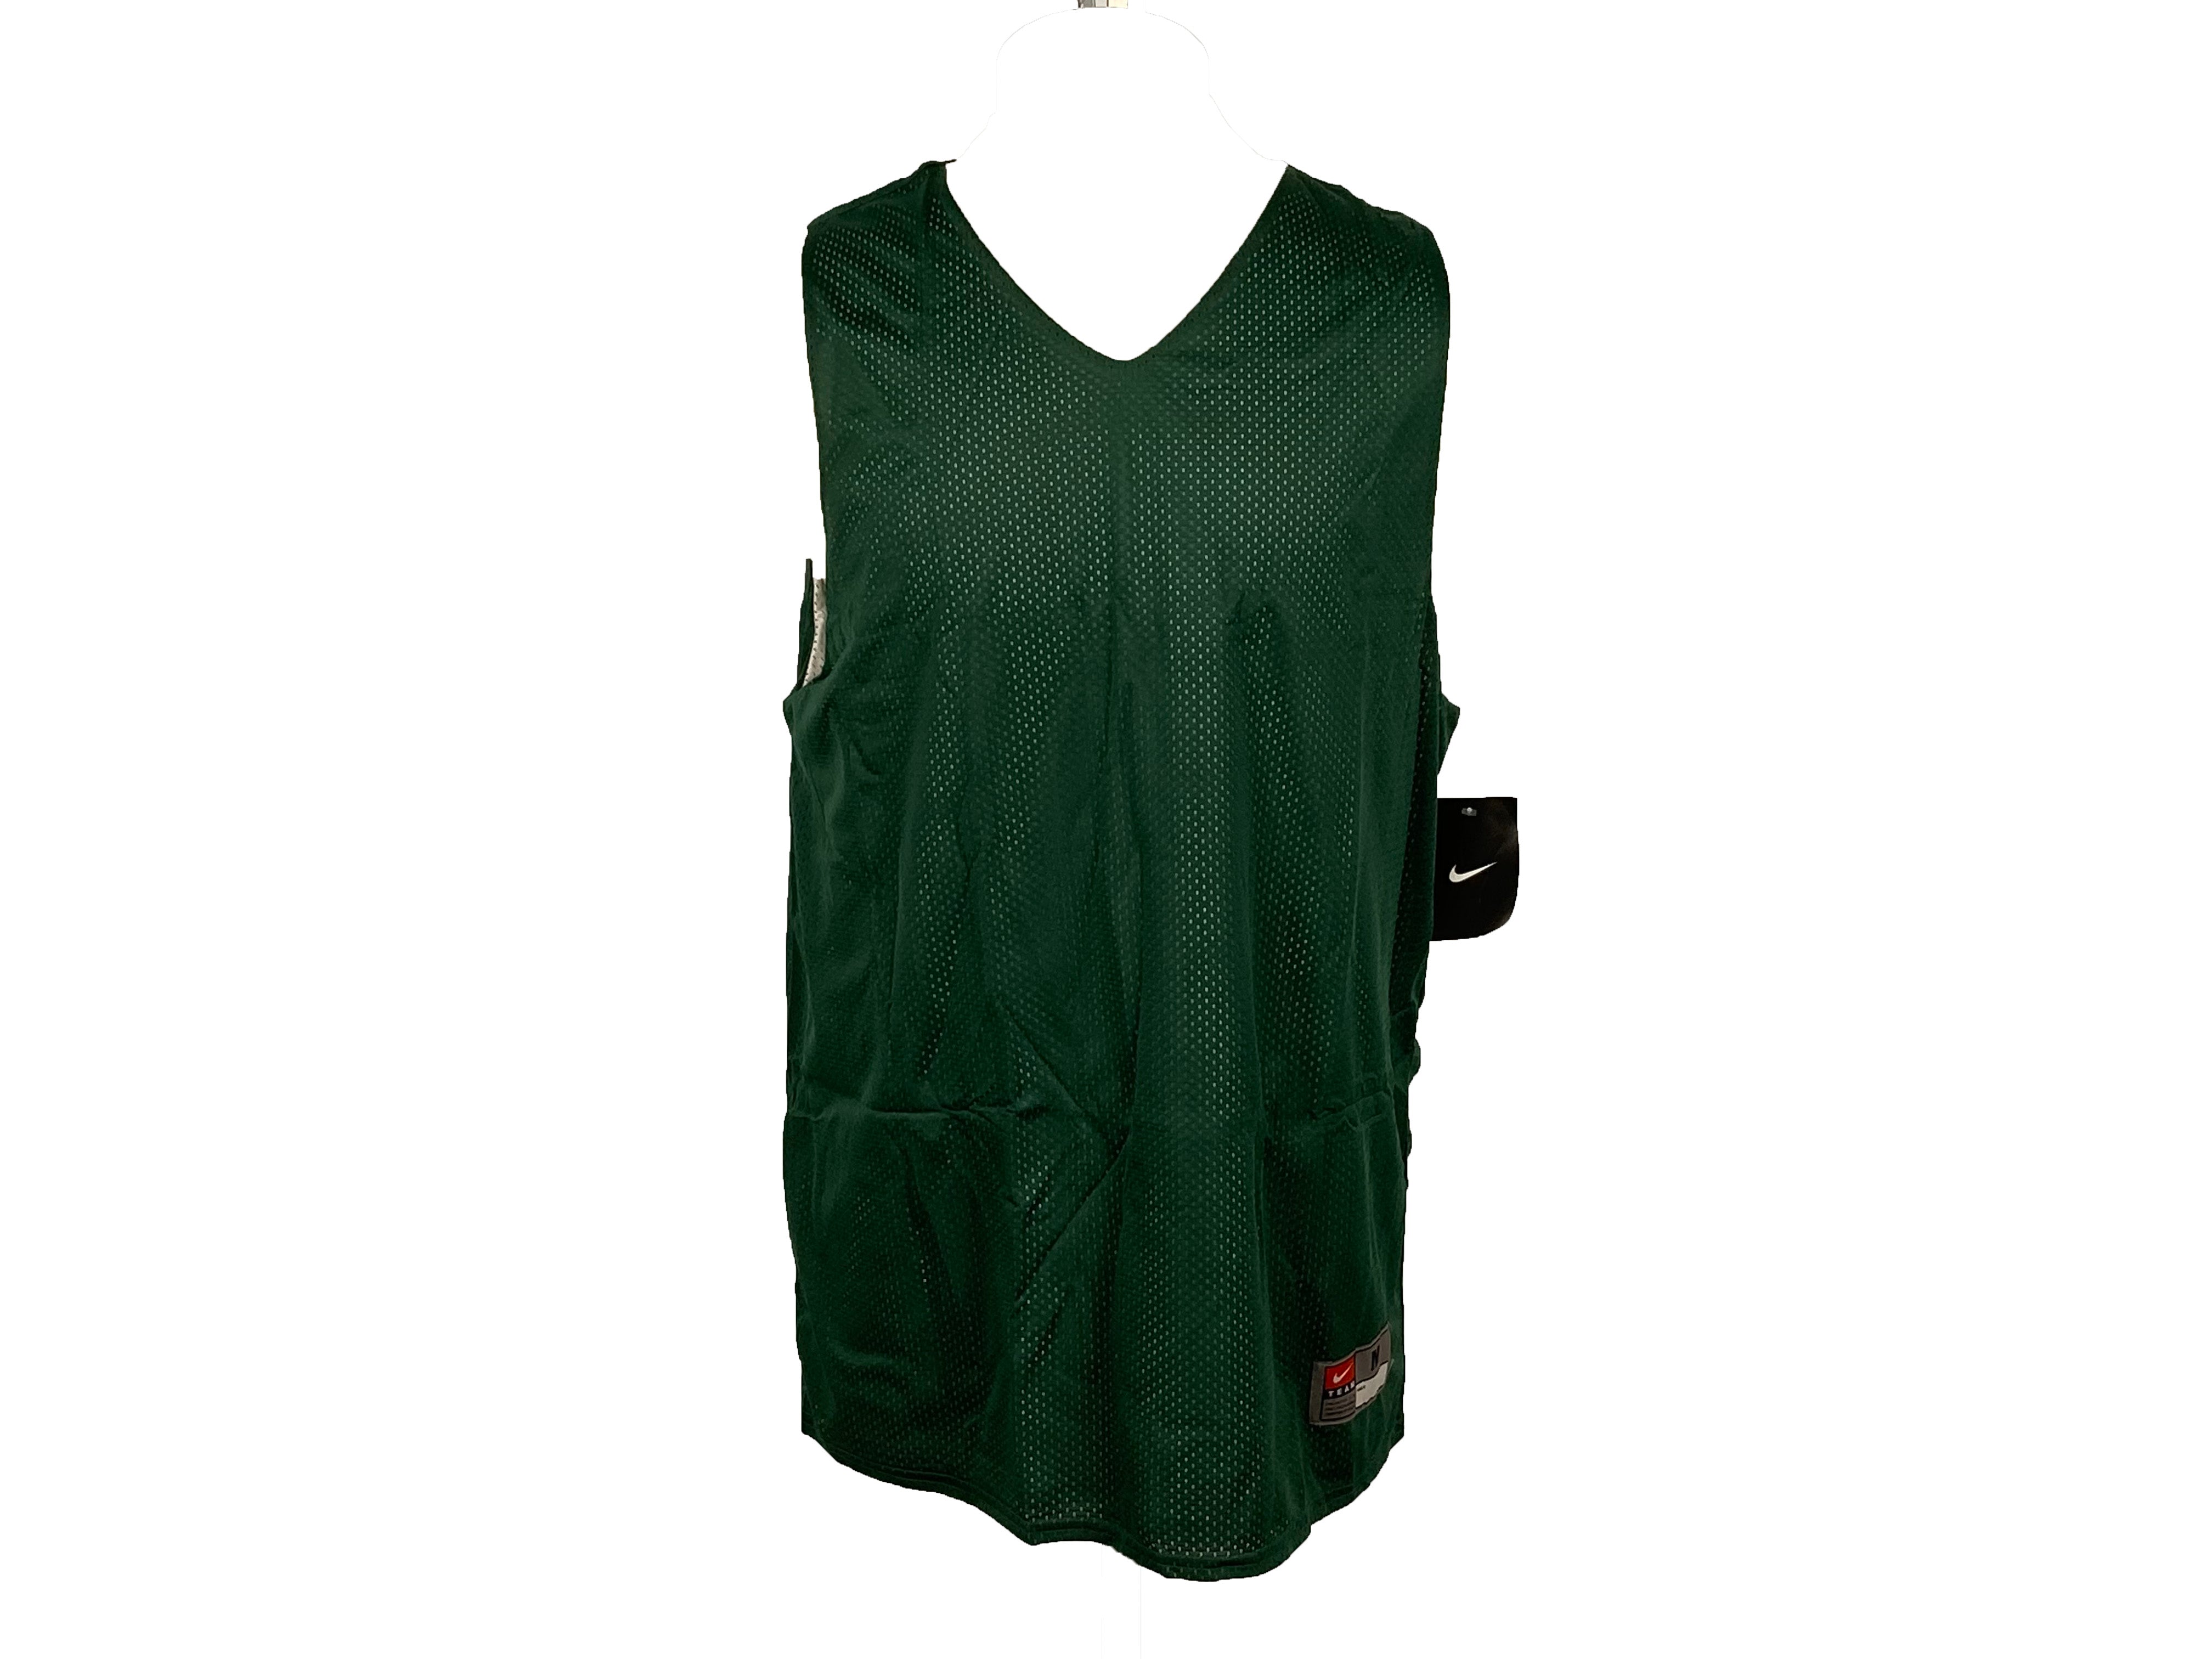 Nike Green/White Reversible Basketball Jersey Men's Size M